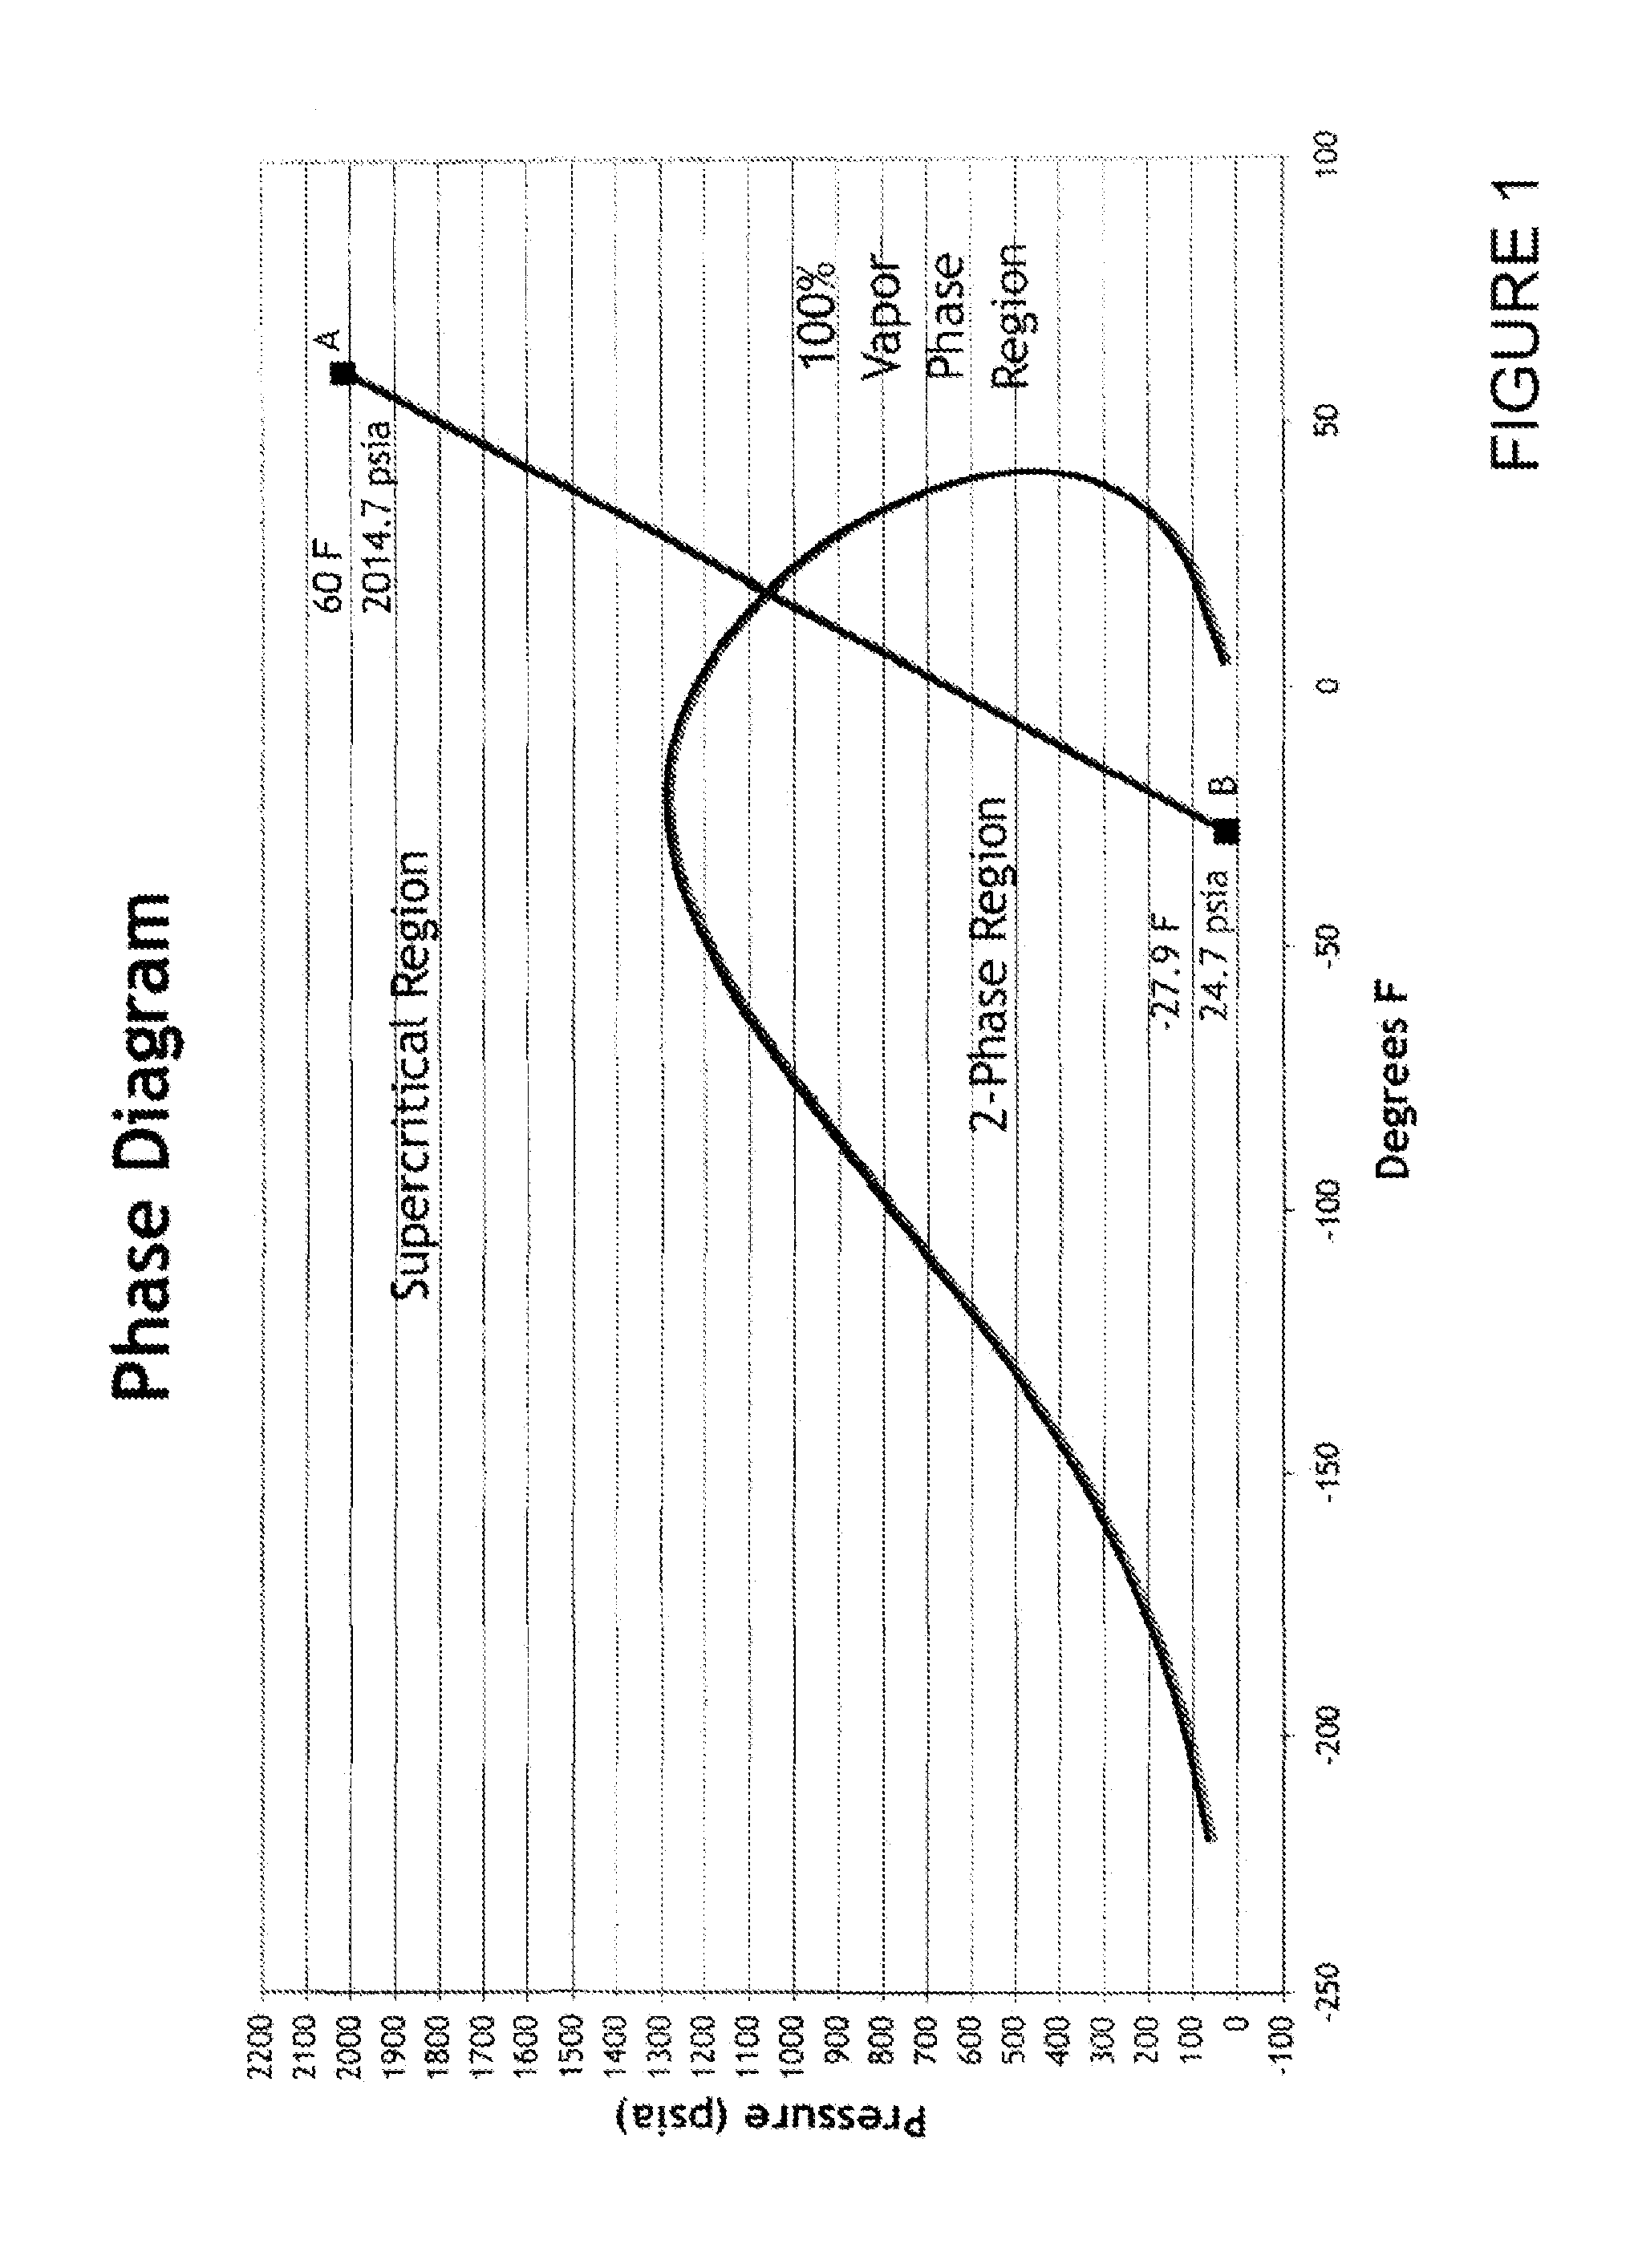 Multi-stage ratio pressure regulator system